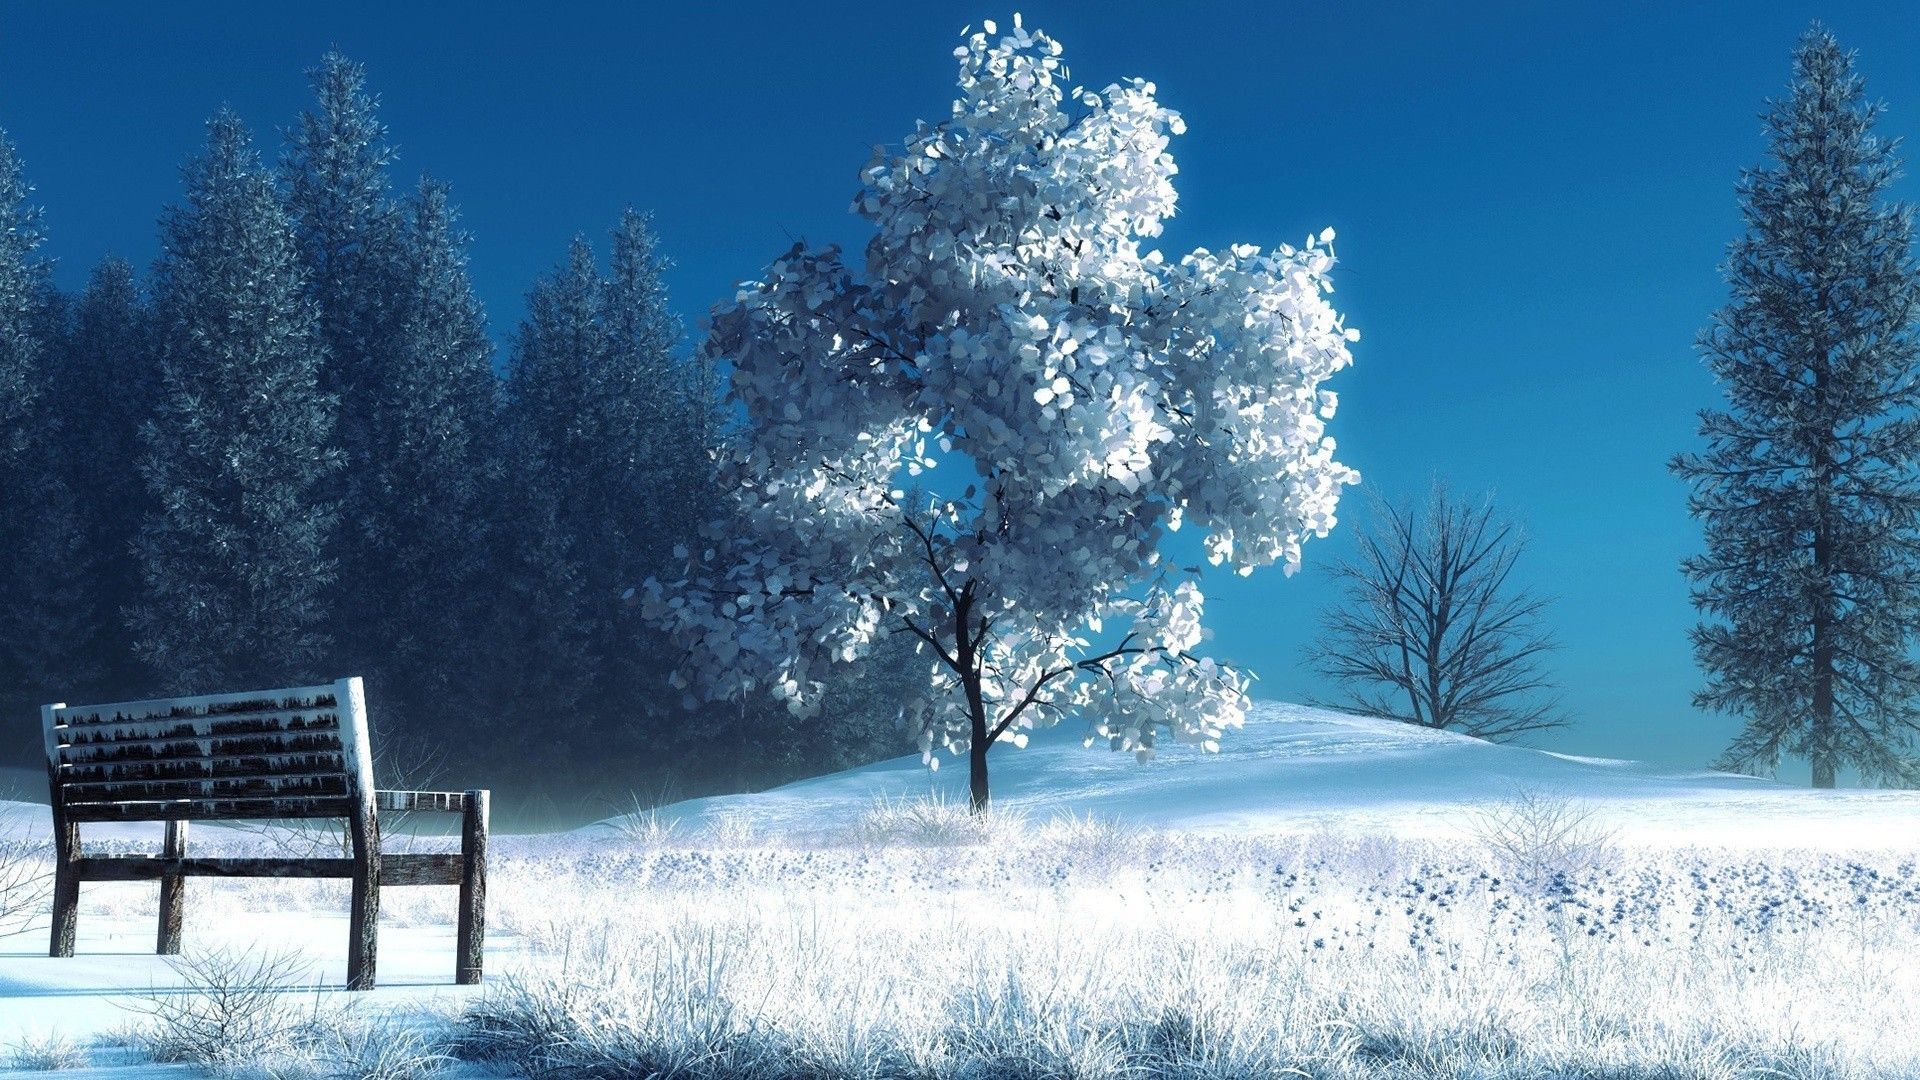 Anime fox tree animal sunshine forest snow winter wallpaper  3500x2238   607191  WallpaperUP